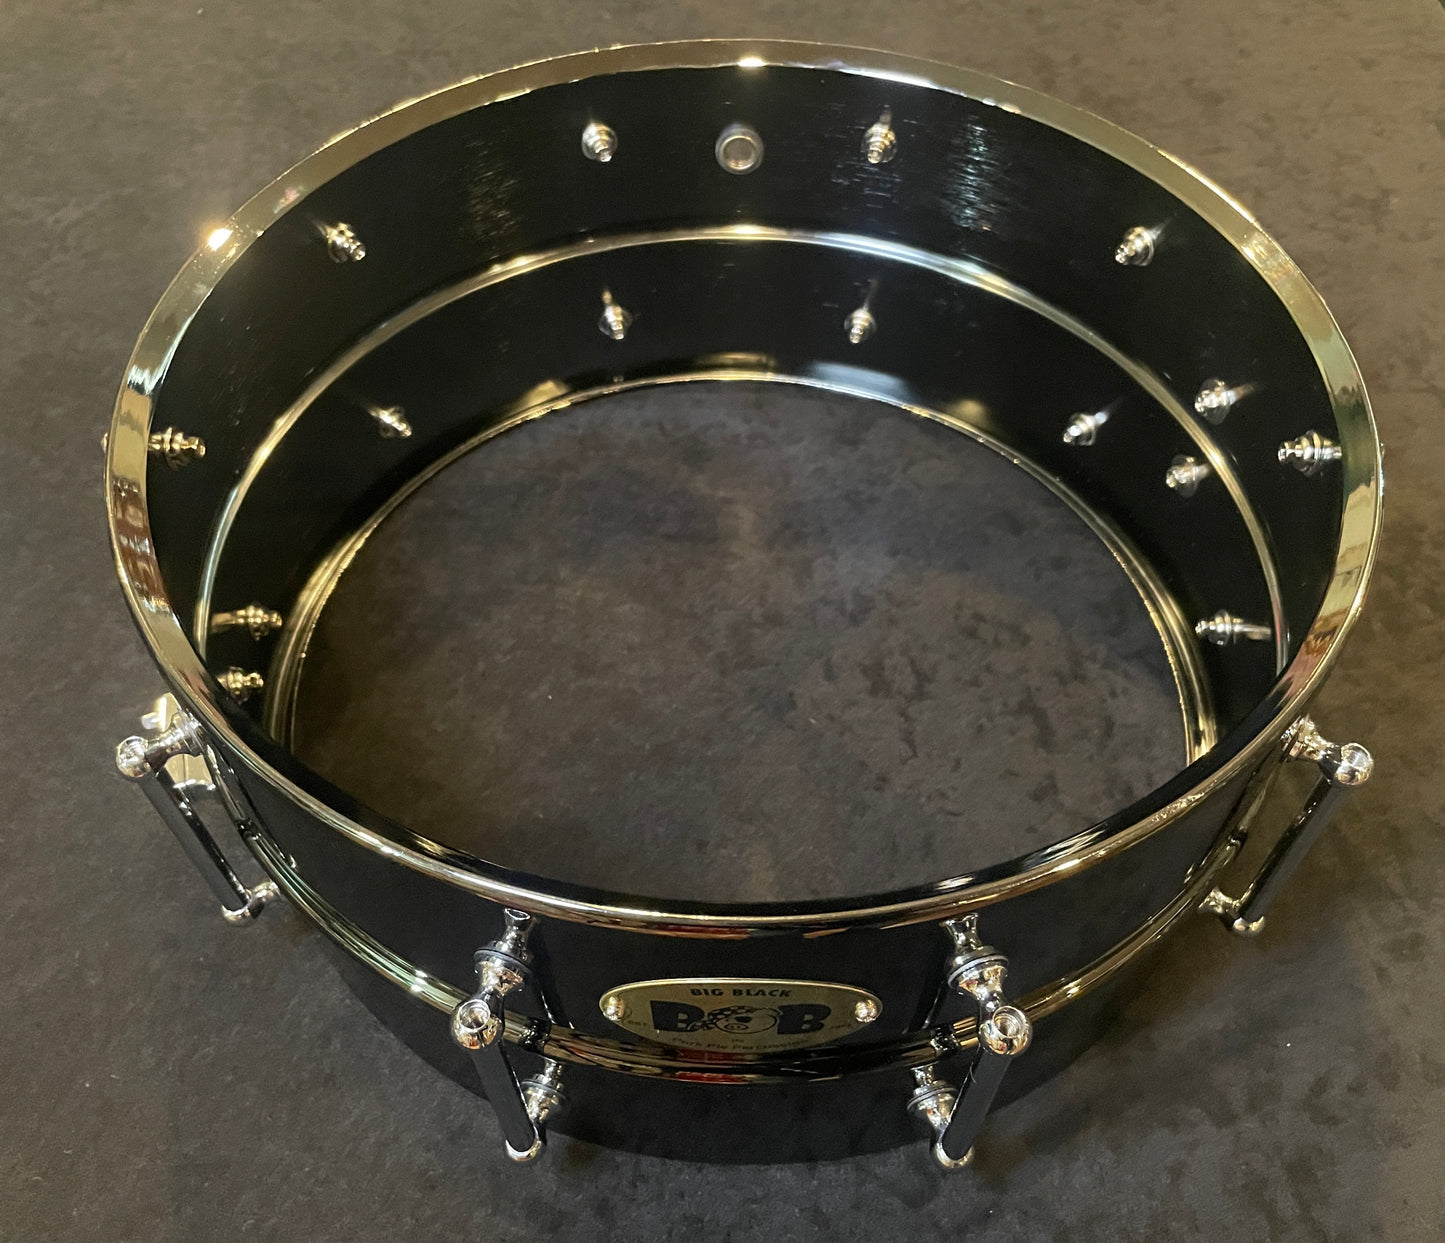 Pork Pie 6.5x14 Big Black Brass Snare Drum BOB